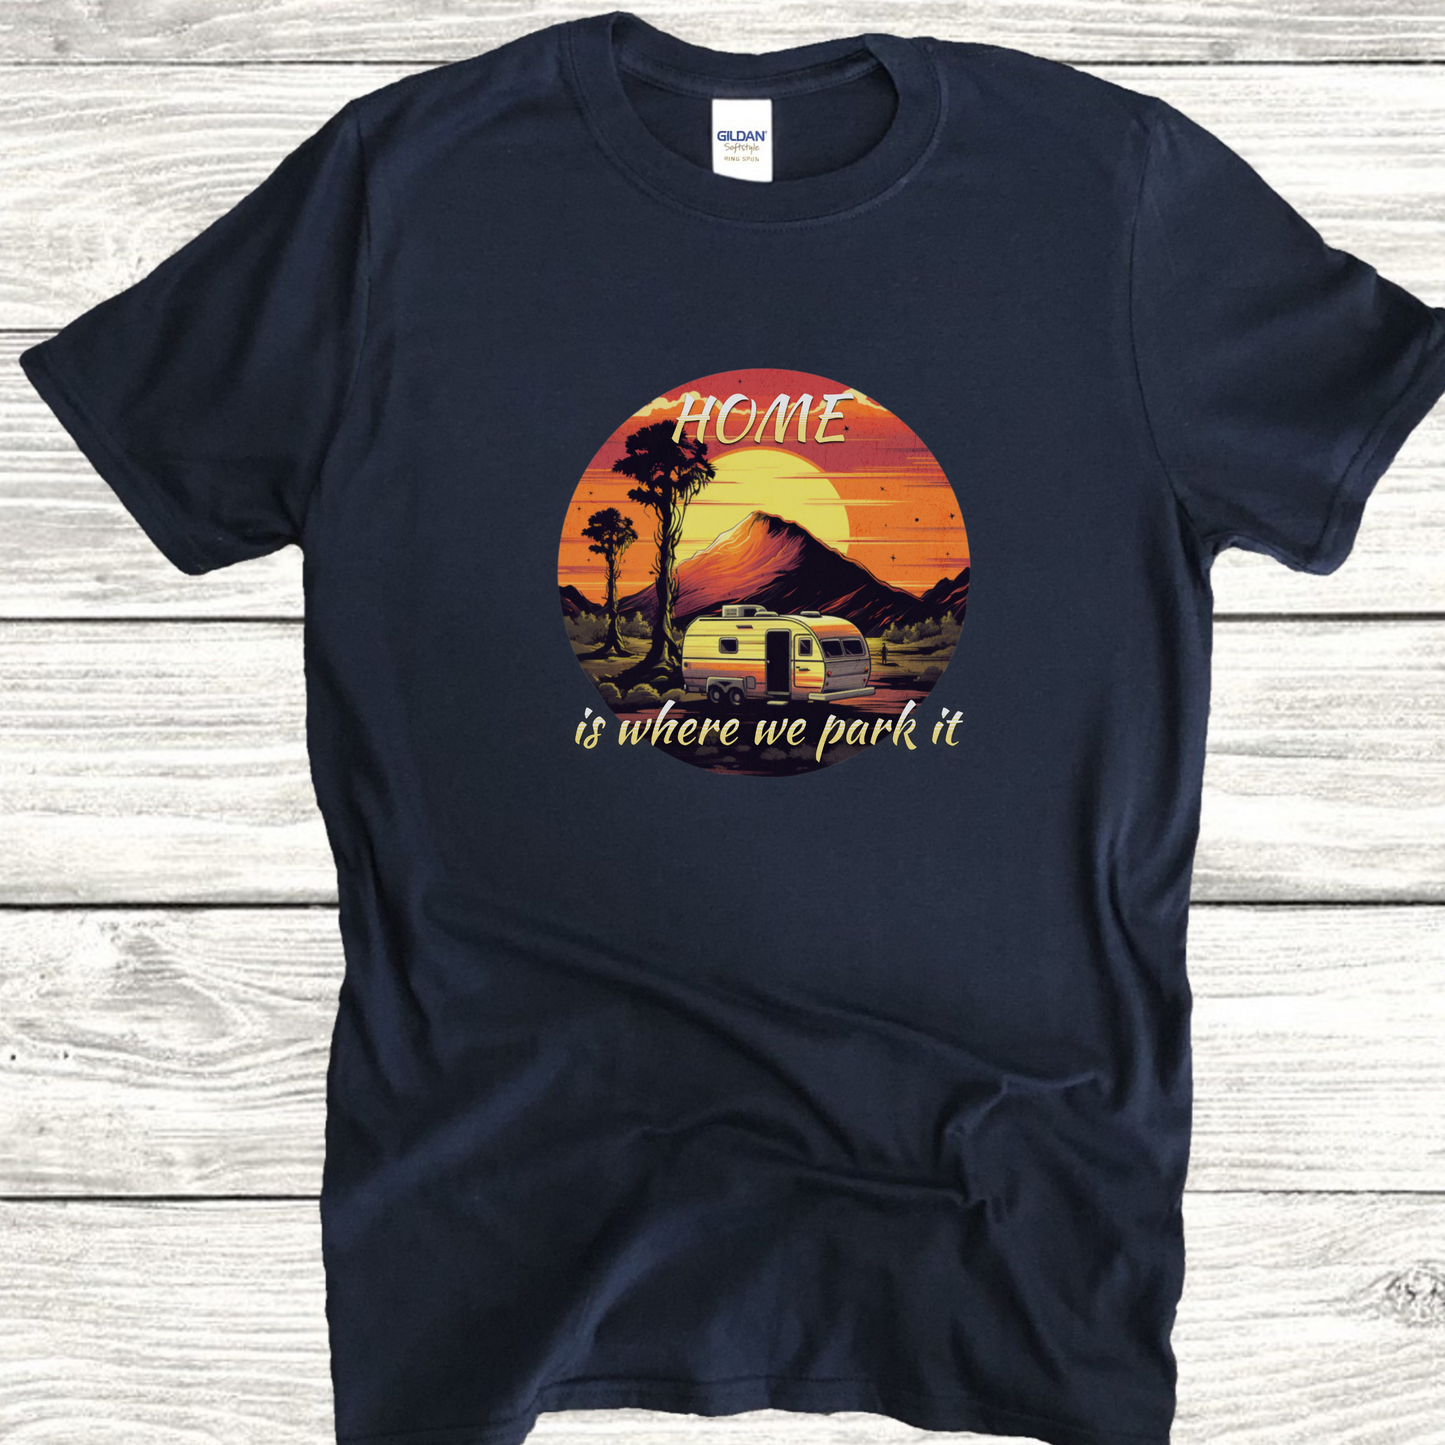 "Home is where we park it" - Caravan Sunset T-Shirt